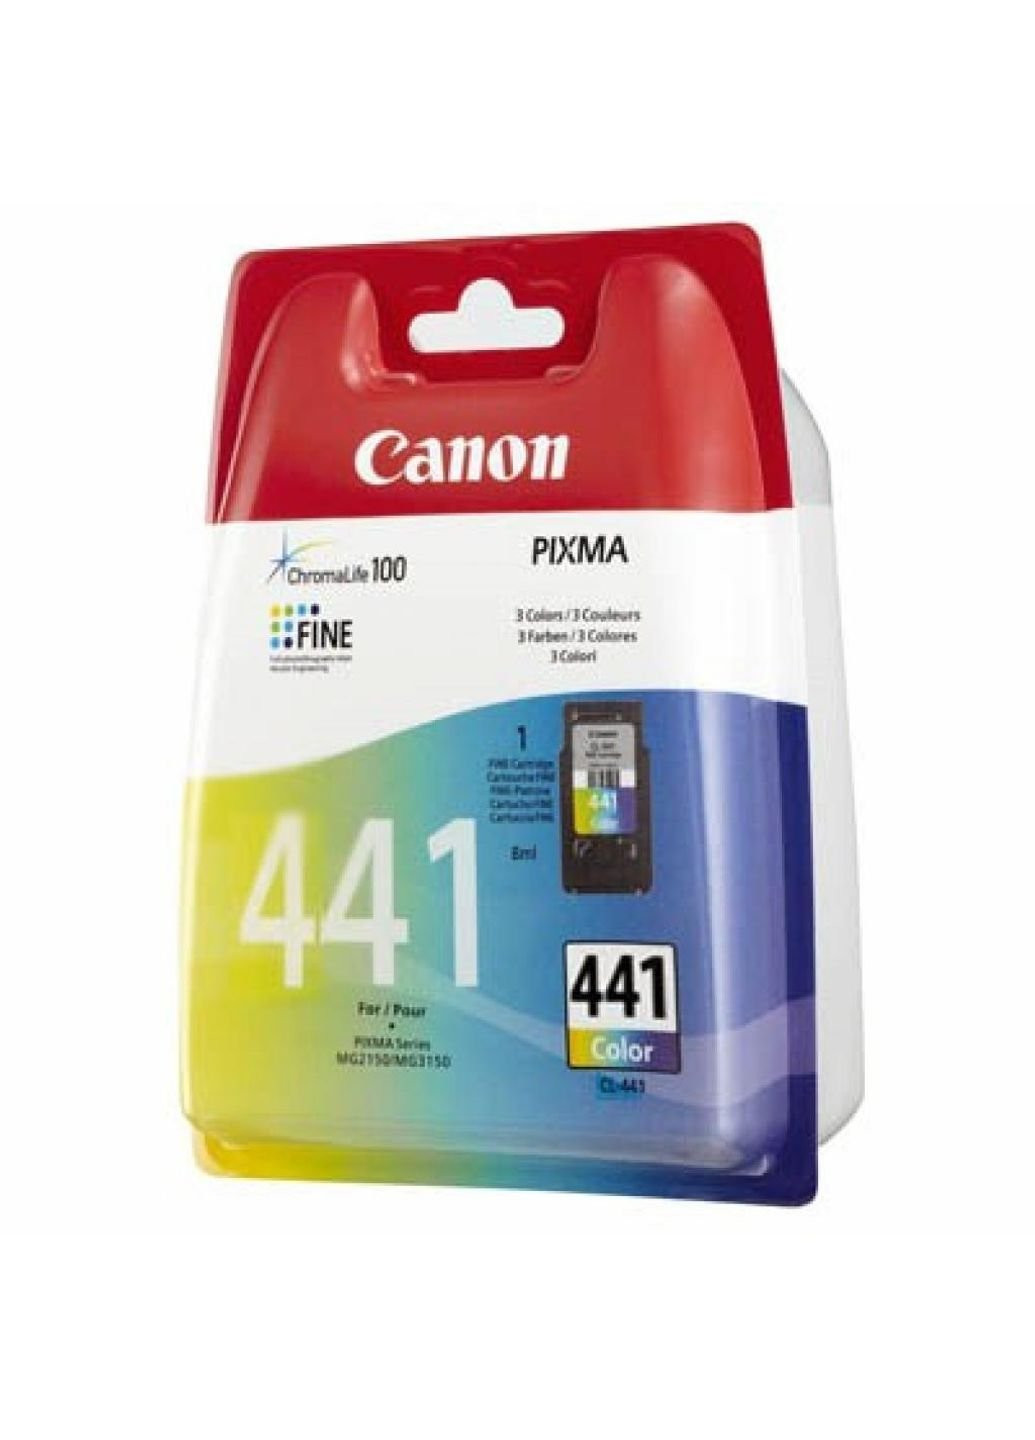 Картридж (5221B001) Canon cl-441 color для pixma mg2140/3140 (247617035)